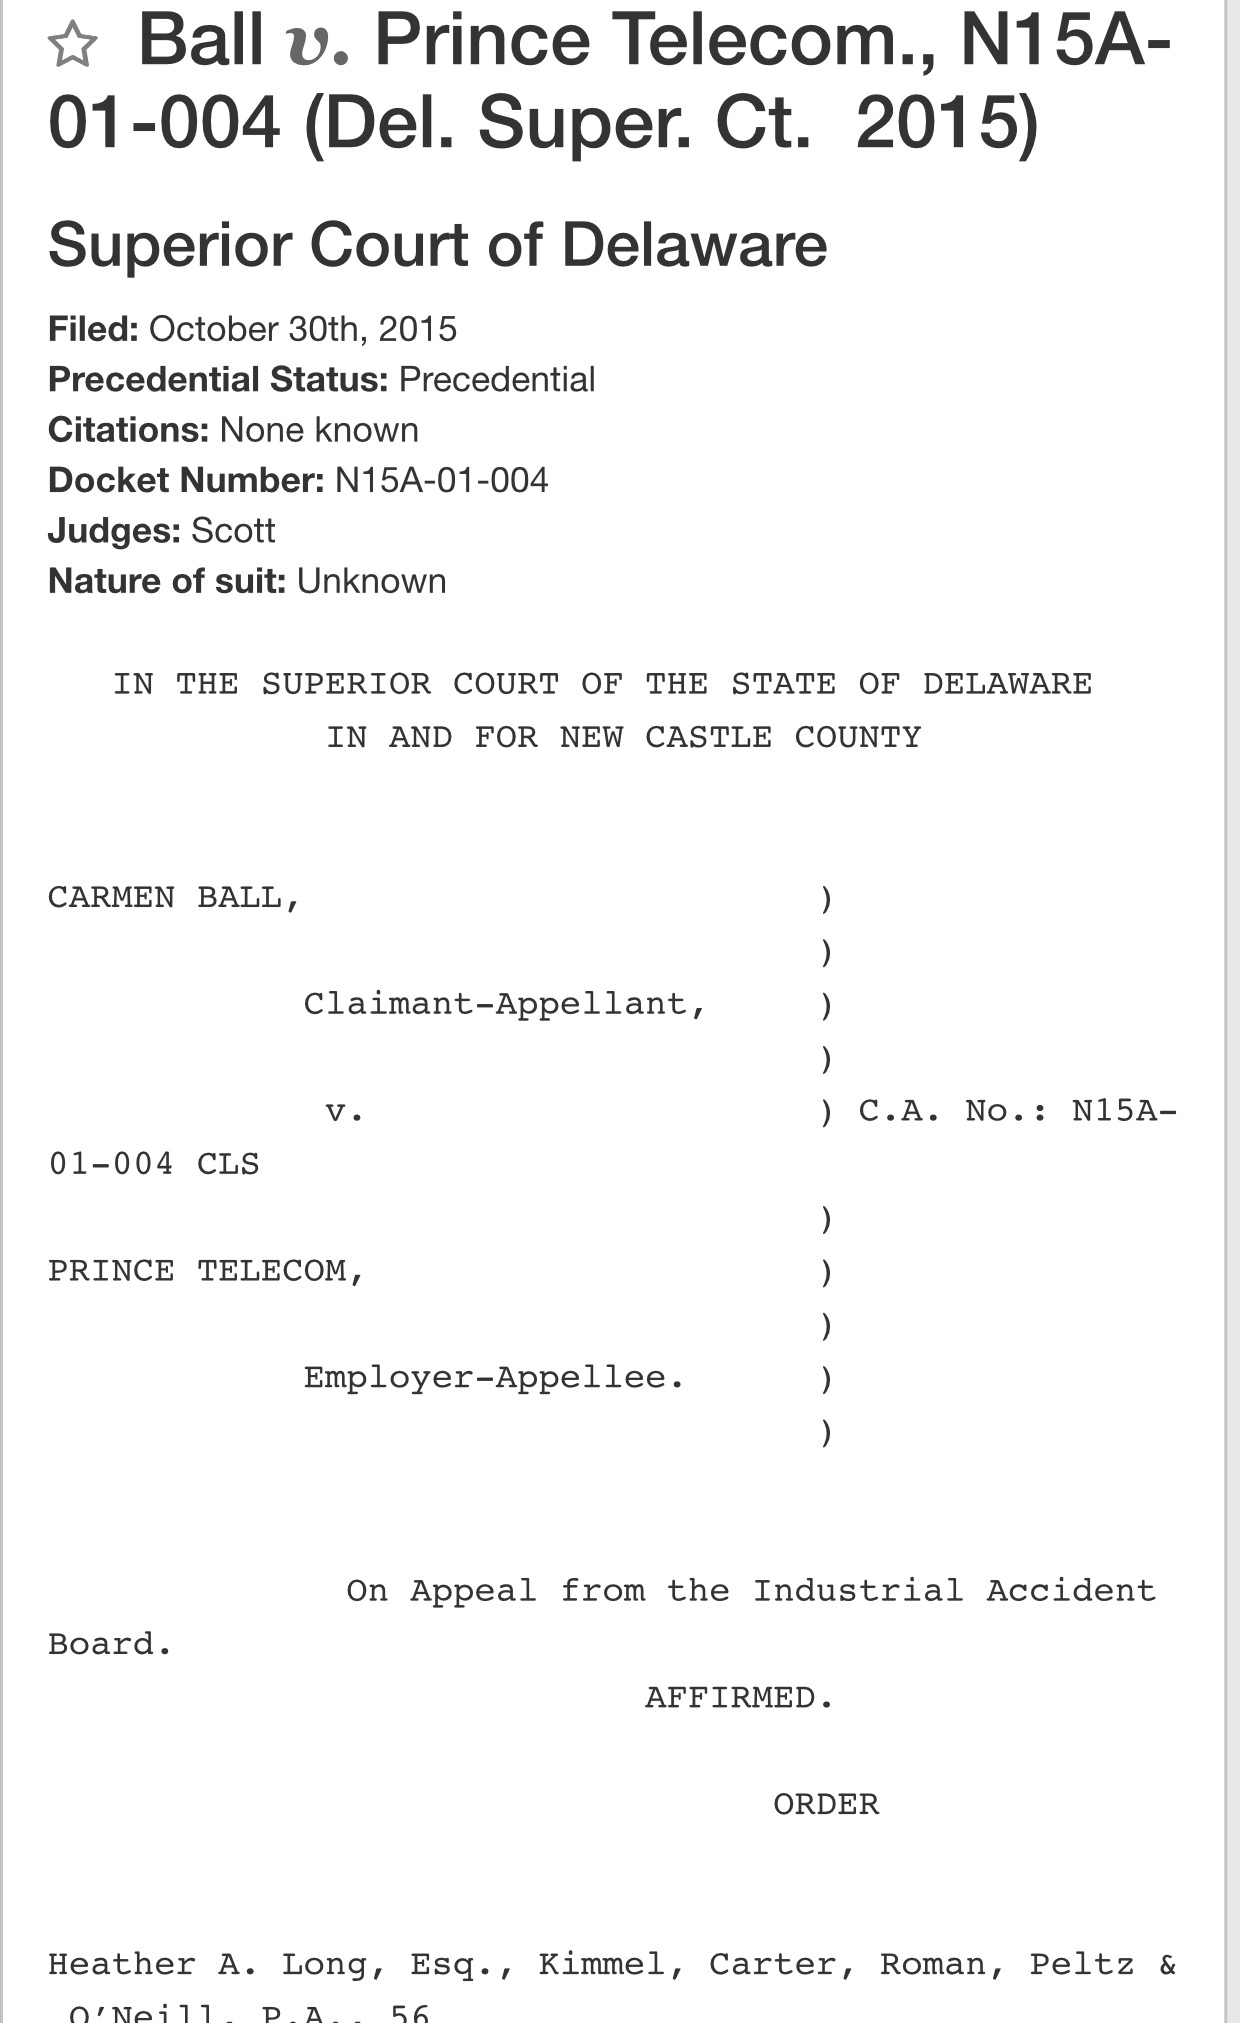 Ball v Prince Telecom Workers Comp Retaliation lawsuithttps://www.courtlistener.com/opinion/3151292/ball-v-prince-telecom/